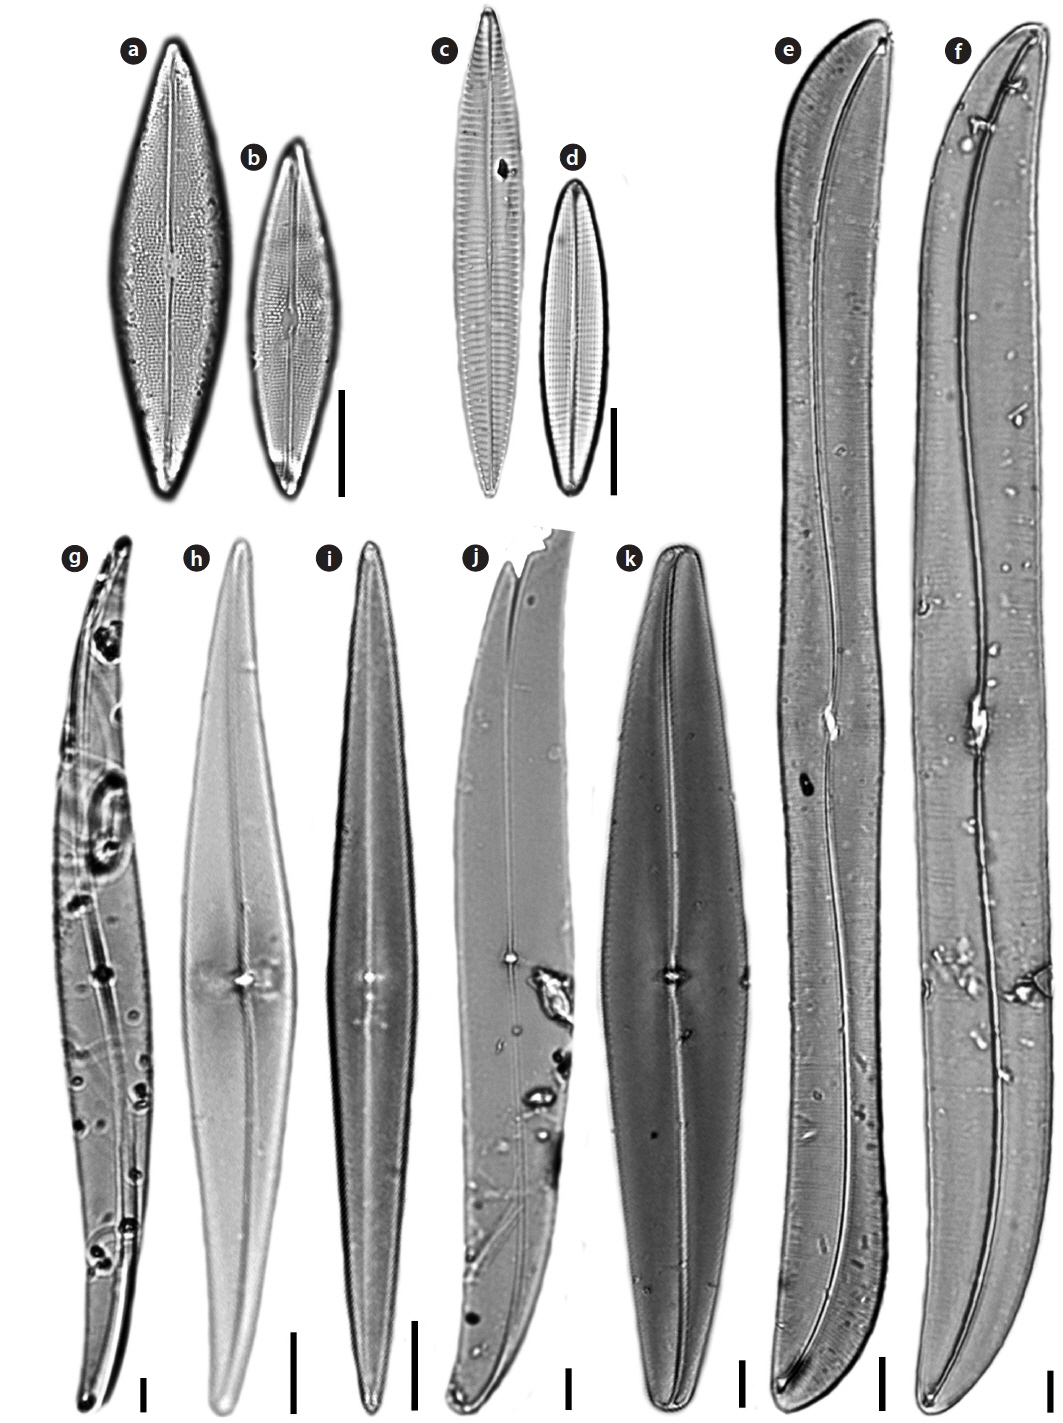 Light microscopy (LM) microphotographs. (a, b) Parlibellus rhombicus, (c, d) Navicula pavilladii, (e) Gyrosigma subtile, (f ) Gyrosigma turgida, (g) Pleurosigma decorum, (h) Pleurosigma inflatum, (i) Pleurosigma patagonicum, (j) Pleurosigma speciosum, and (k) Pleurosigma williamsii. Scale bars, 10 μm.